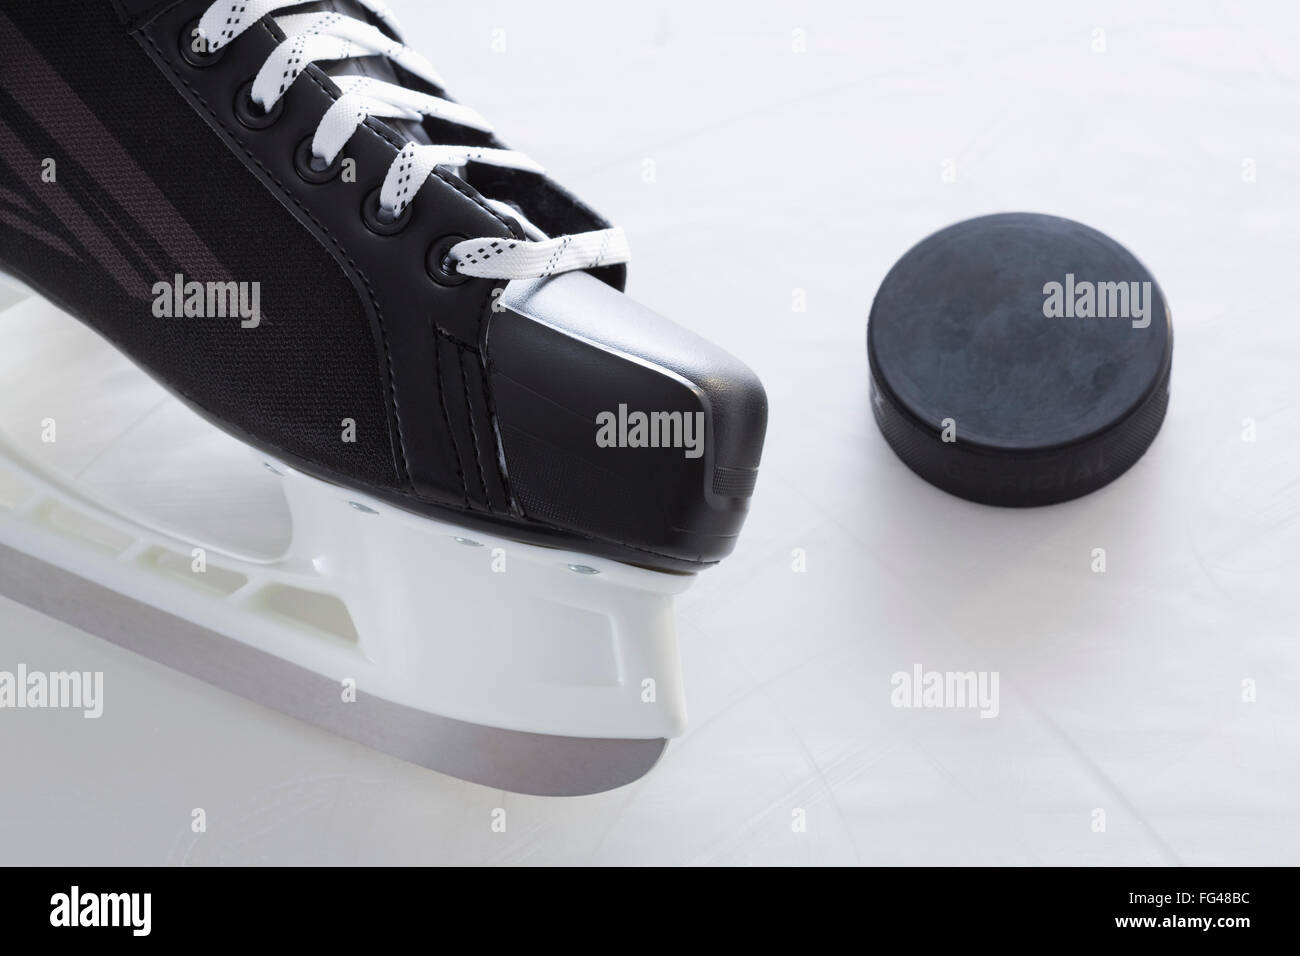 Ice skate and hockey puck Stock Photo